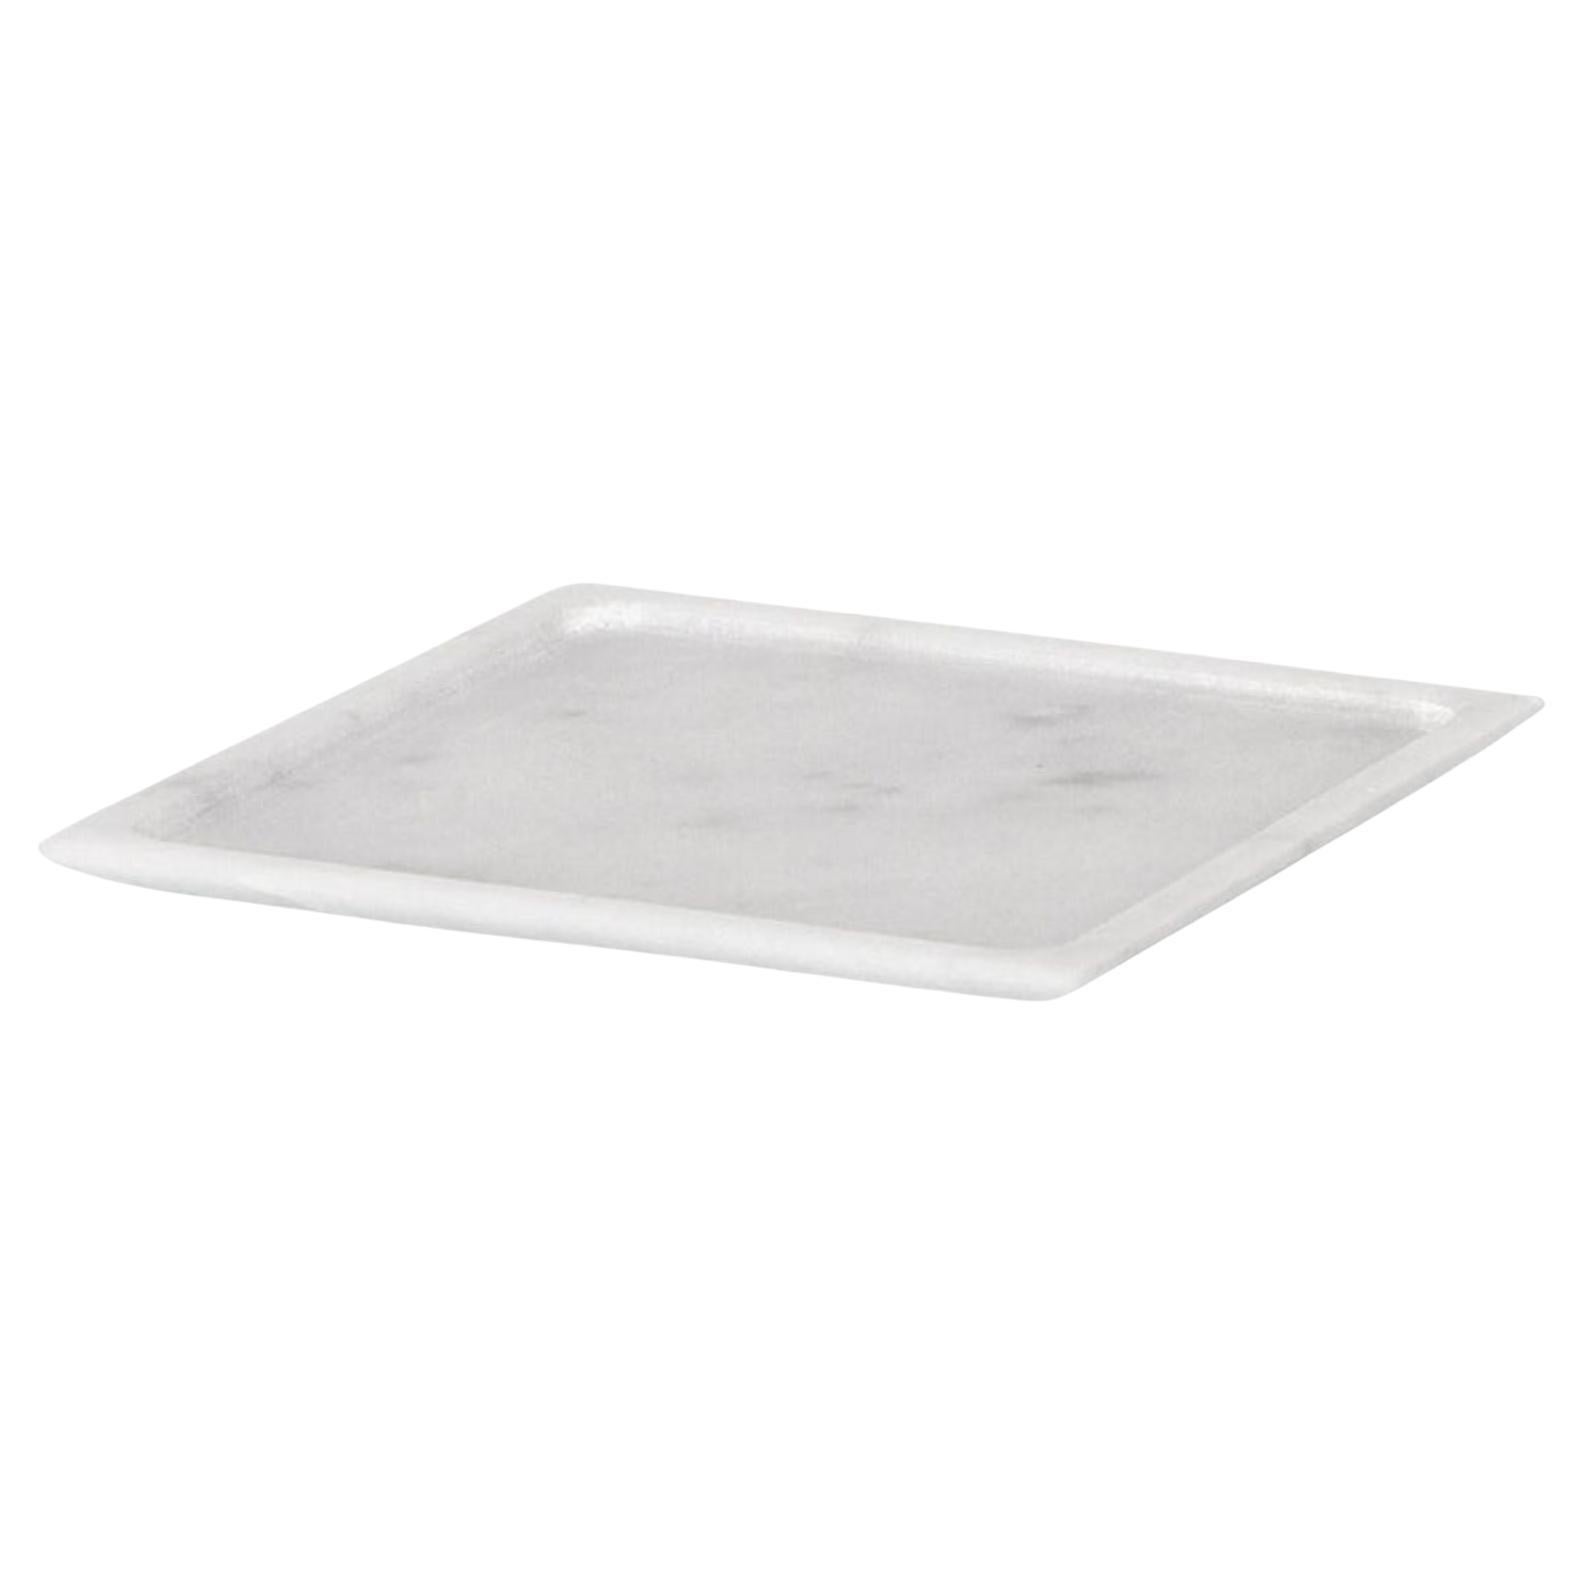 Square Piccolo Plate by Studioformart For Sale